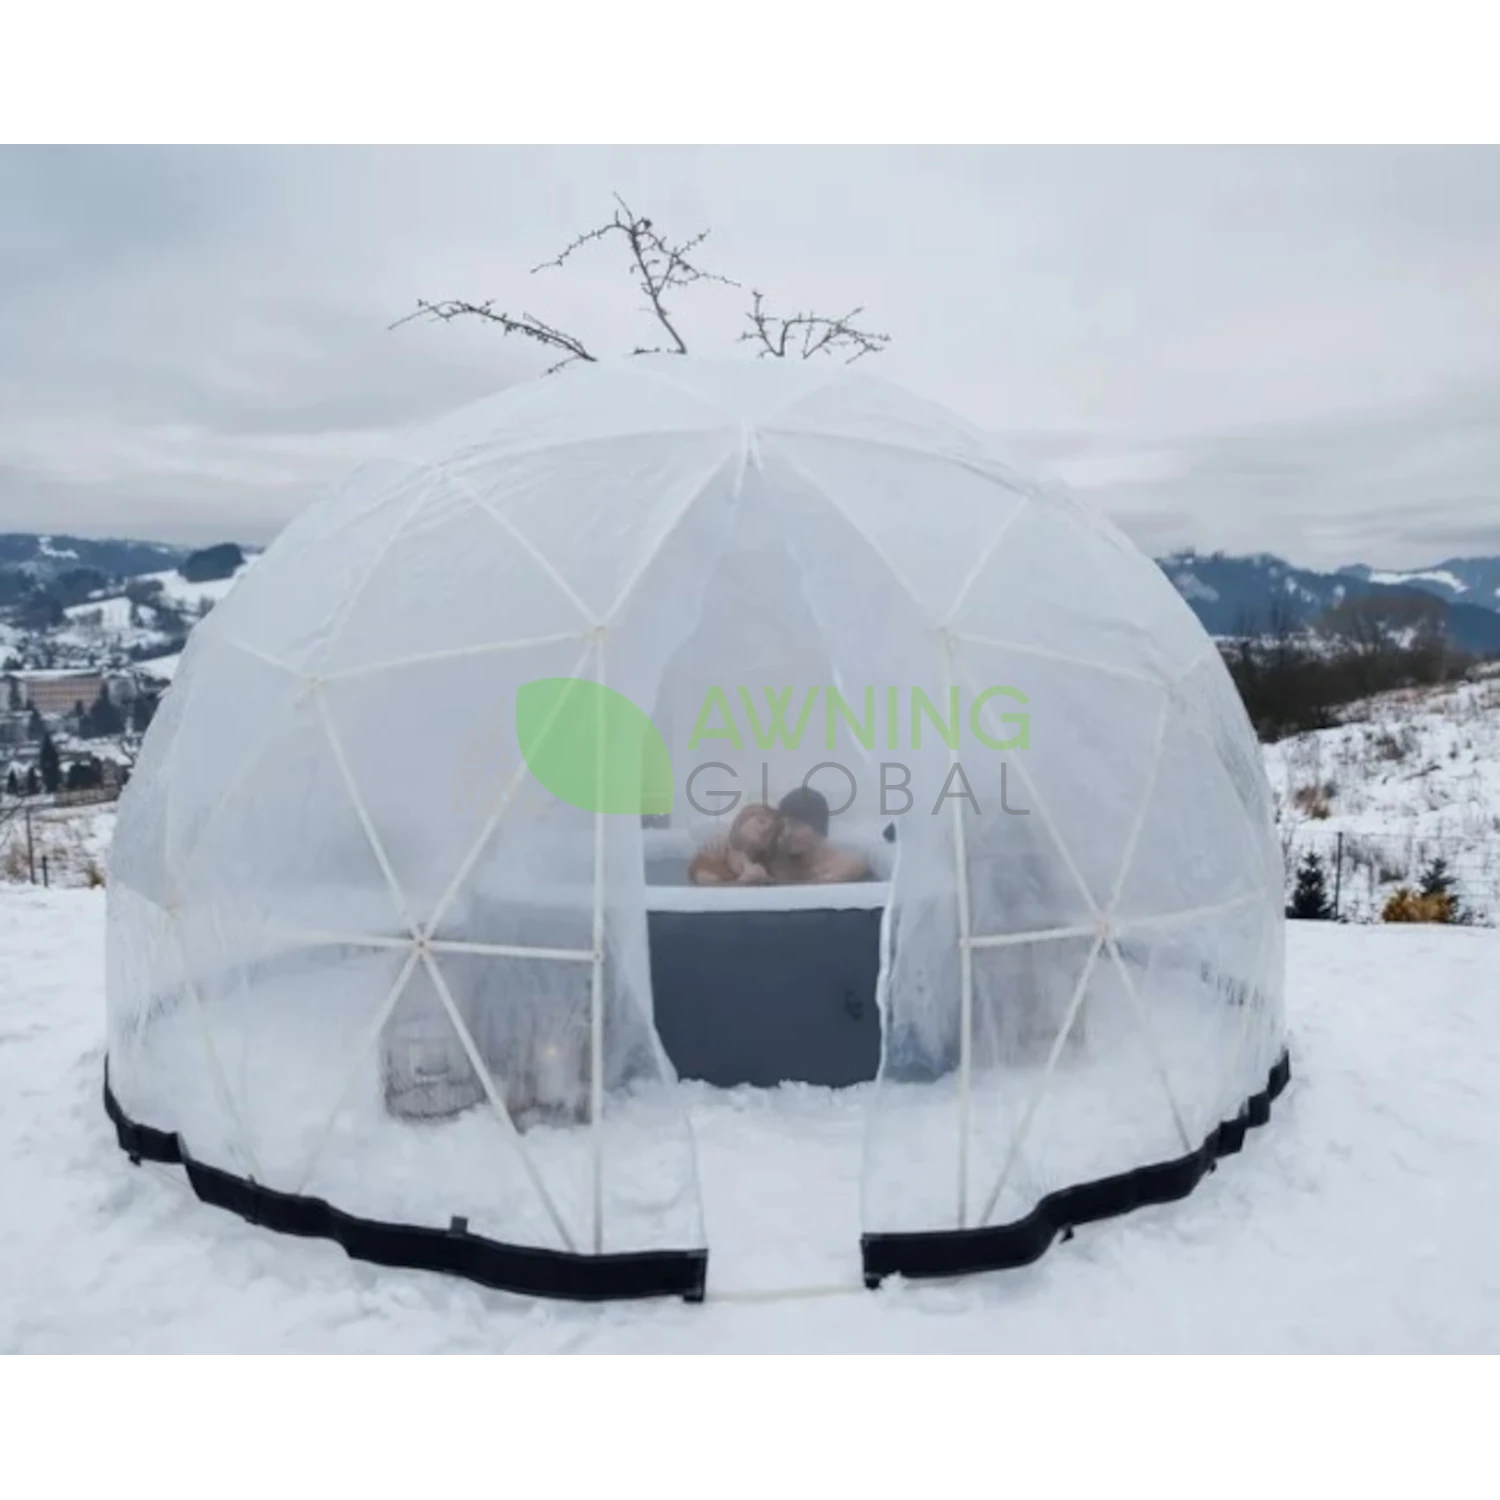 Transparent dome awning global (2)